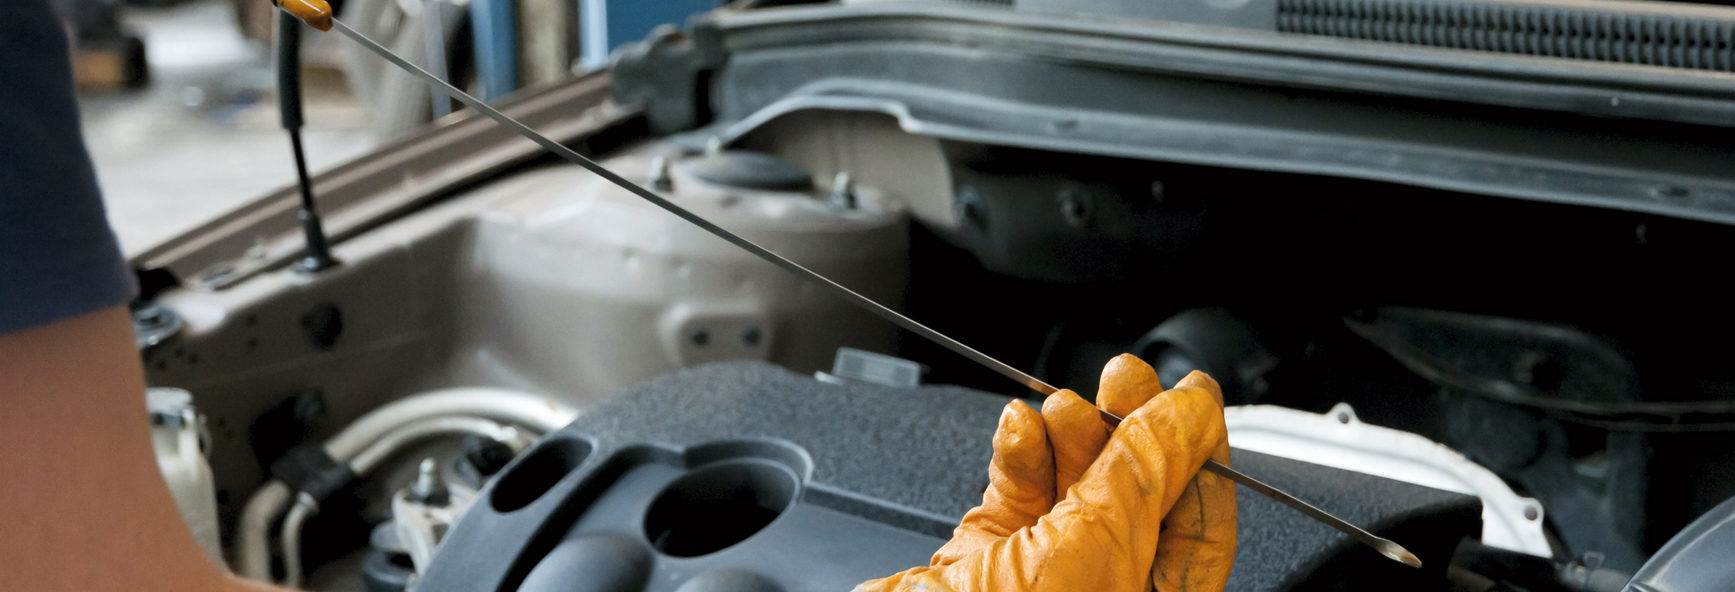 Maintenance of cars - tools, materials, equipment